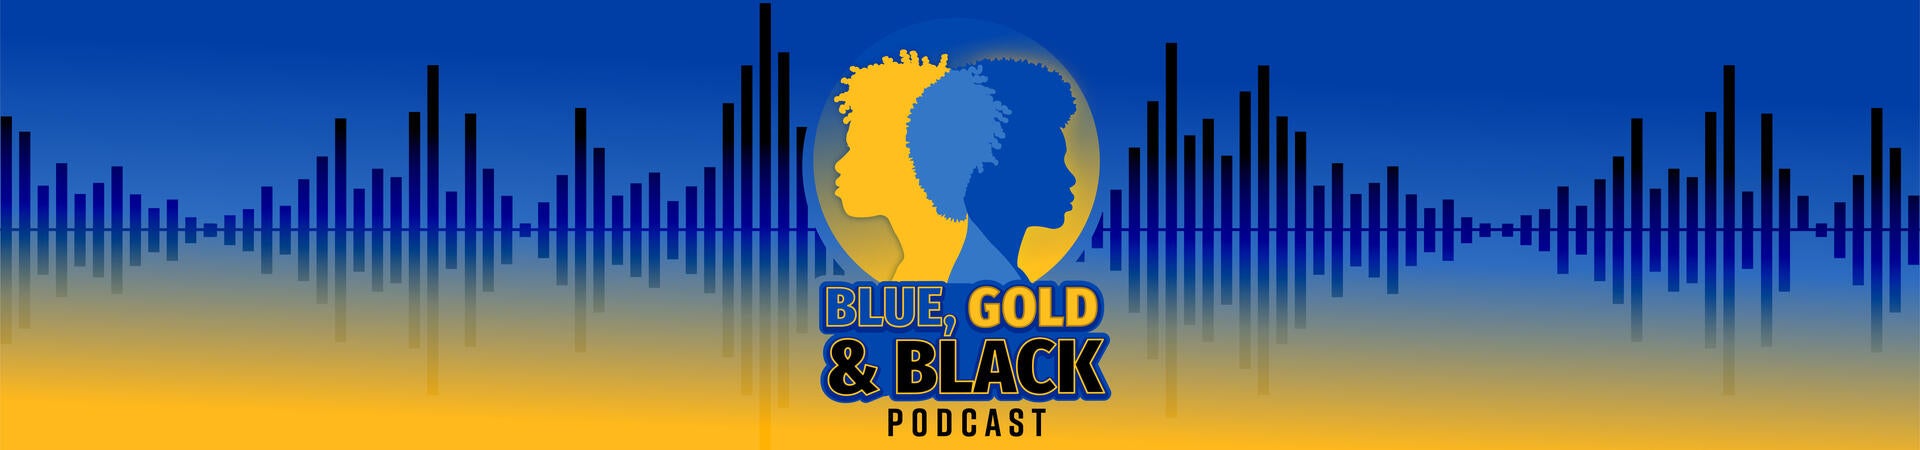 Blue, Gold & BLACK Podcast